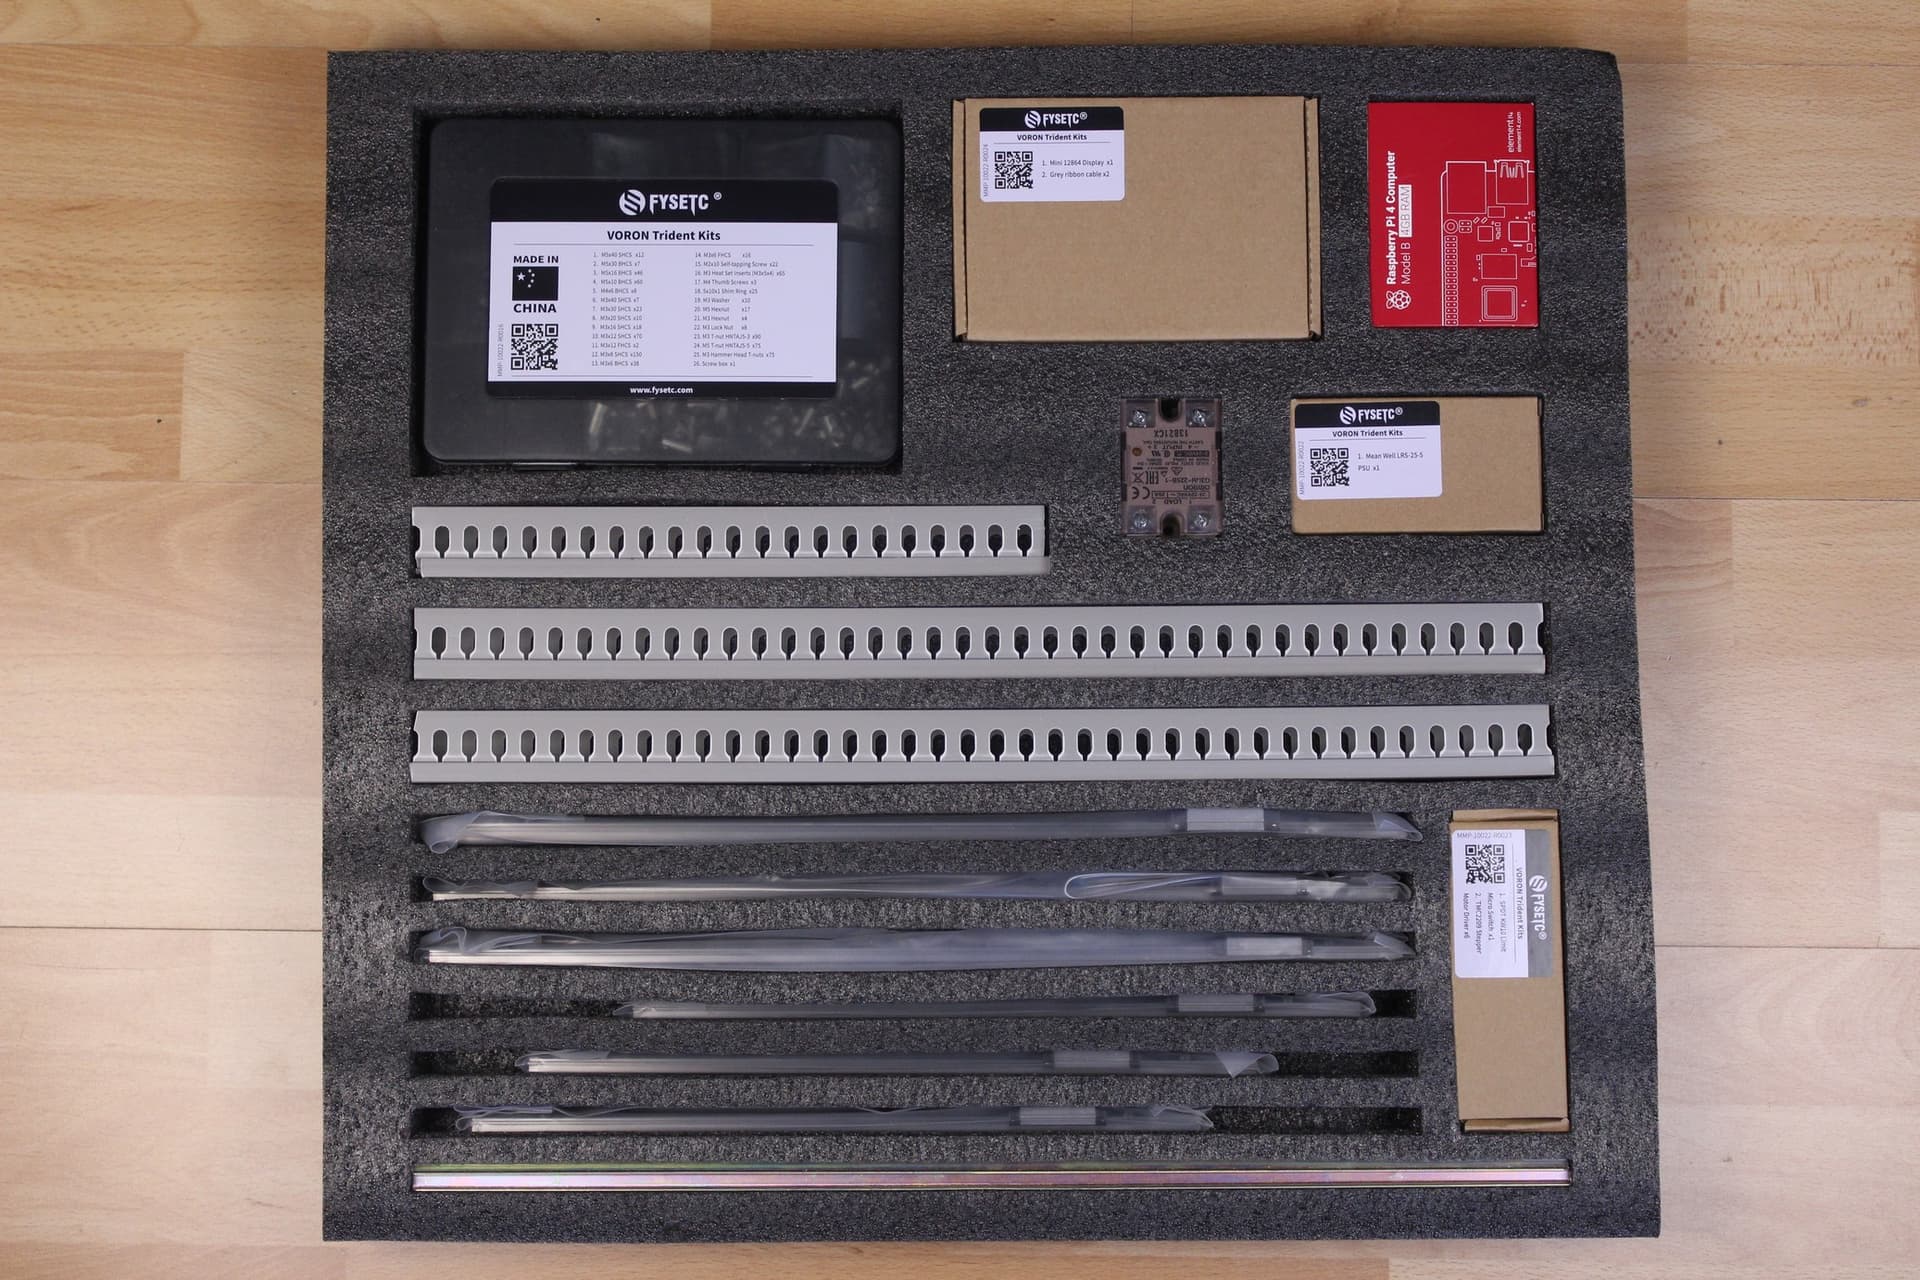 FYSETC Voron Trident Kit Review - Packaging (4)